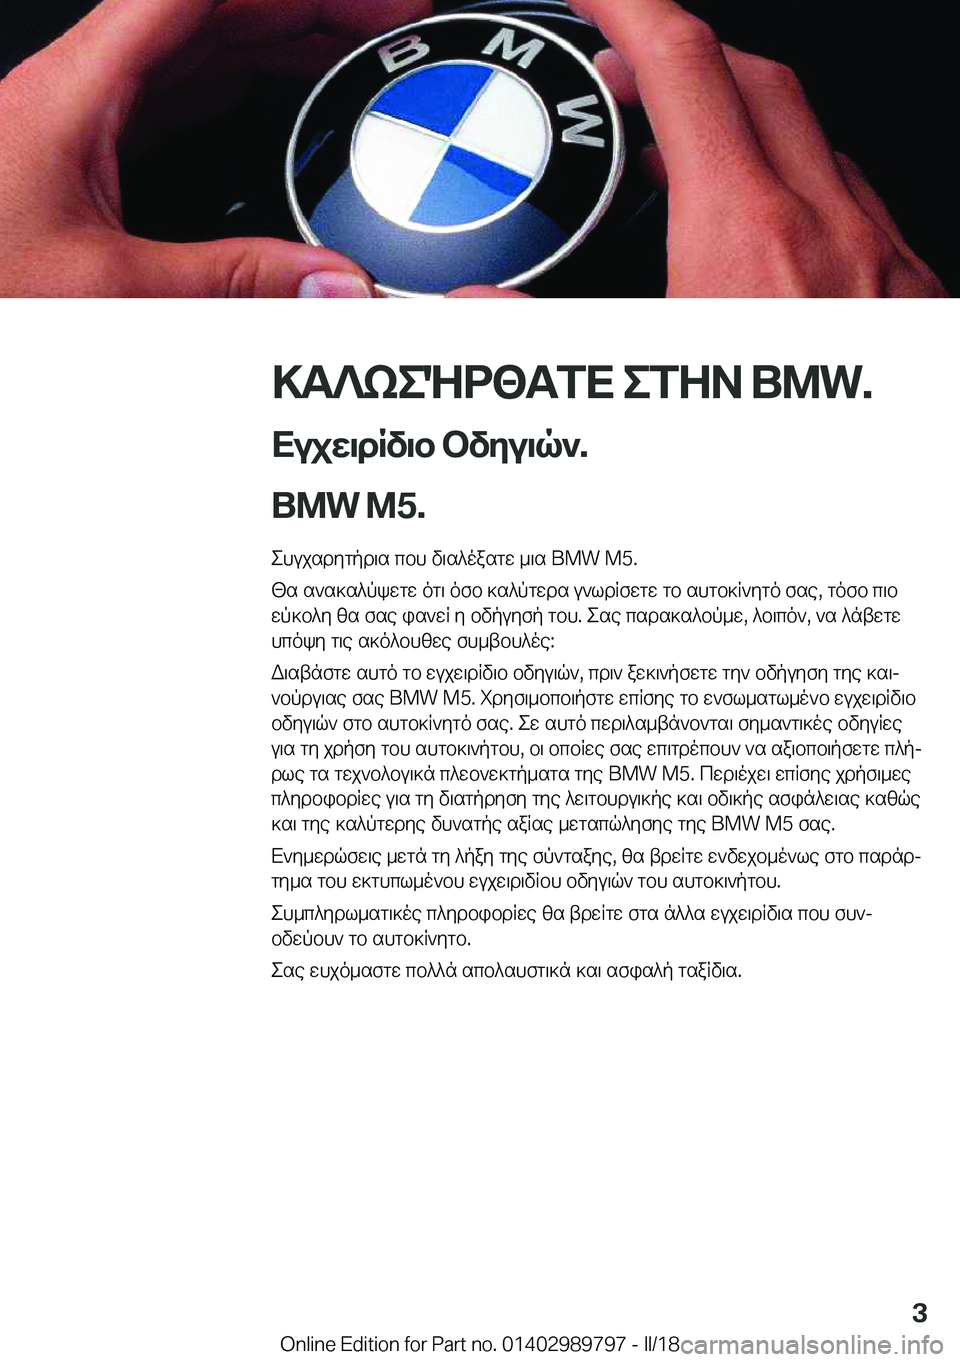 BMW M5 2018  ΟΔΗΓΌΣ ΧΡΉΣΗΣ (in Greek) >T?keNd<TfX�efZA��B�M�W�.
Xujw\dRv\b�bvyu\q`�.
�B�M�W��M�5�.  e h u j s d y g p d \ s�  c b h�  v \ s ^ o a s g w�  _ \ s� �B�M�W� �M�5�. [ s�  s ` s ] s ^ p k w g 